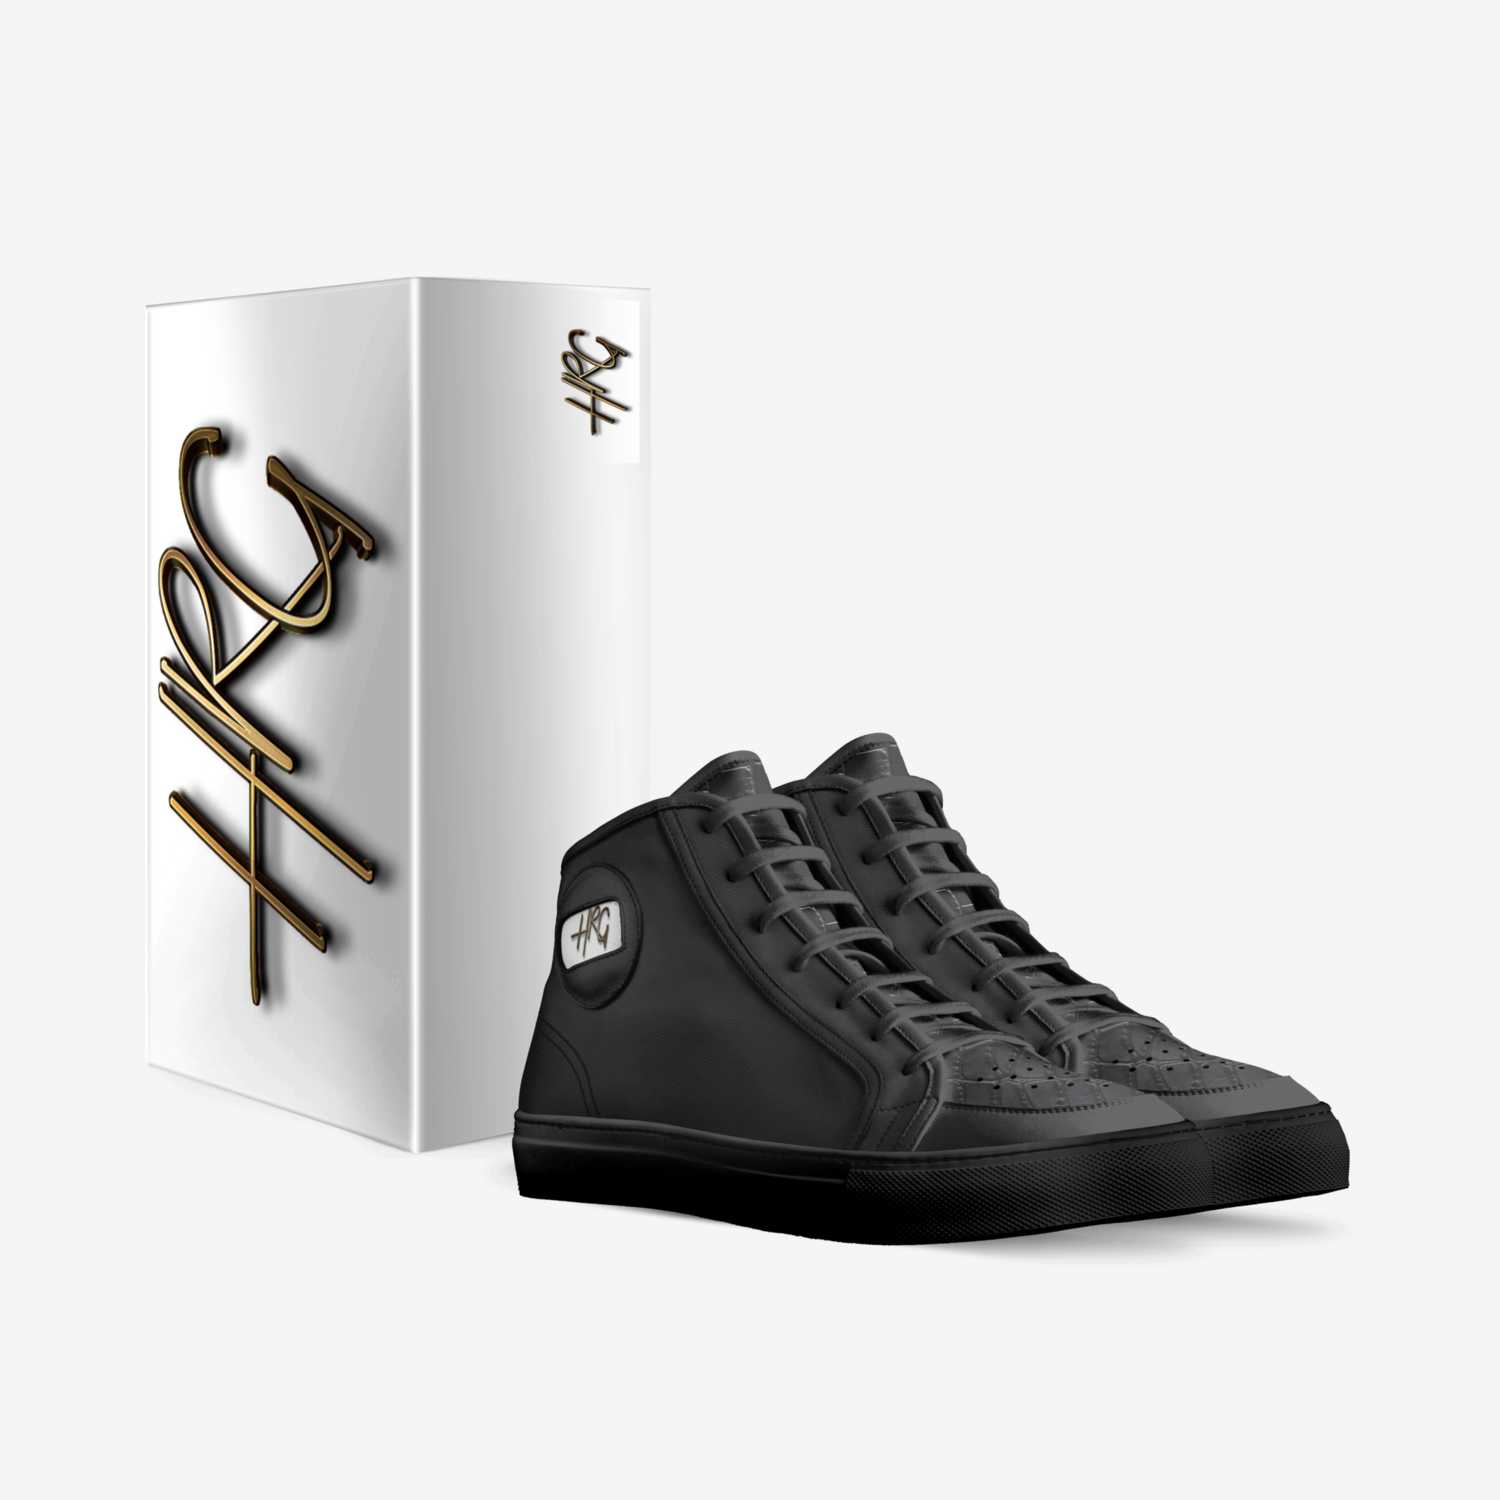 Dark Nights 2 custom made in Italy shoes by Harold Gray | Box view